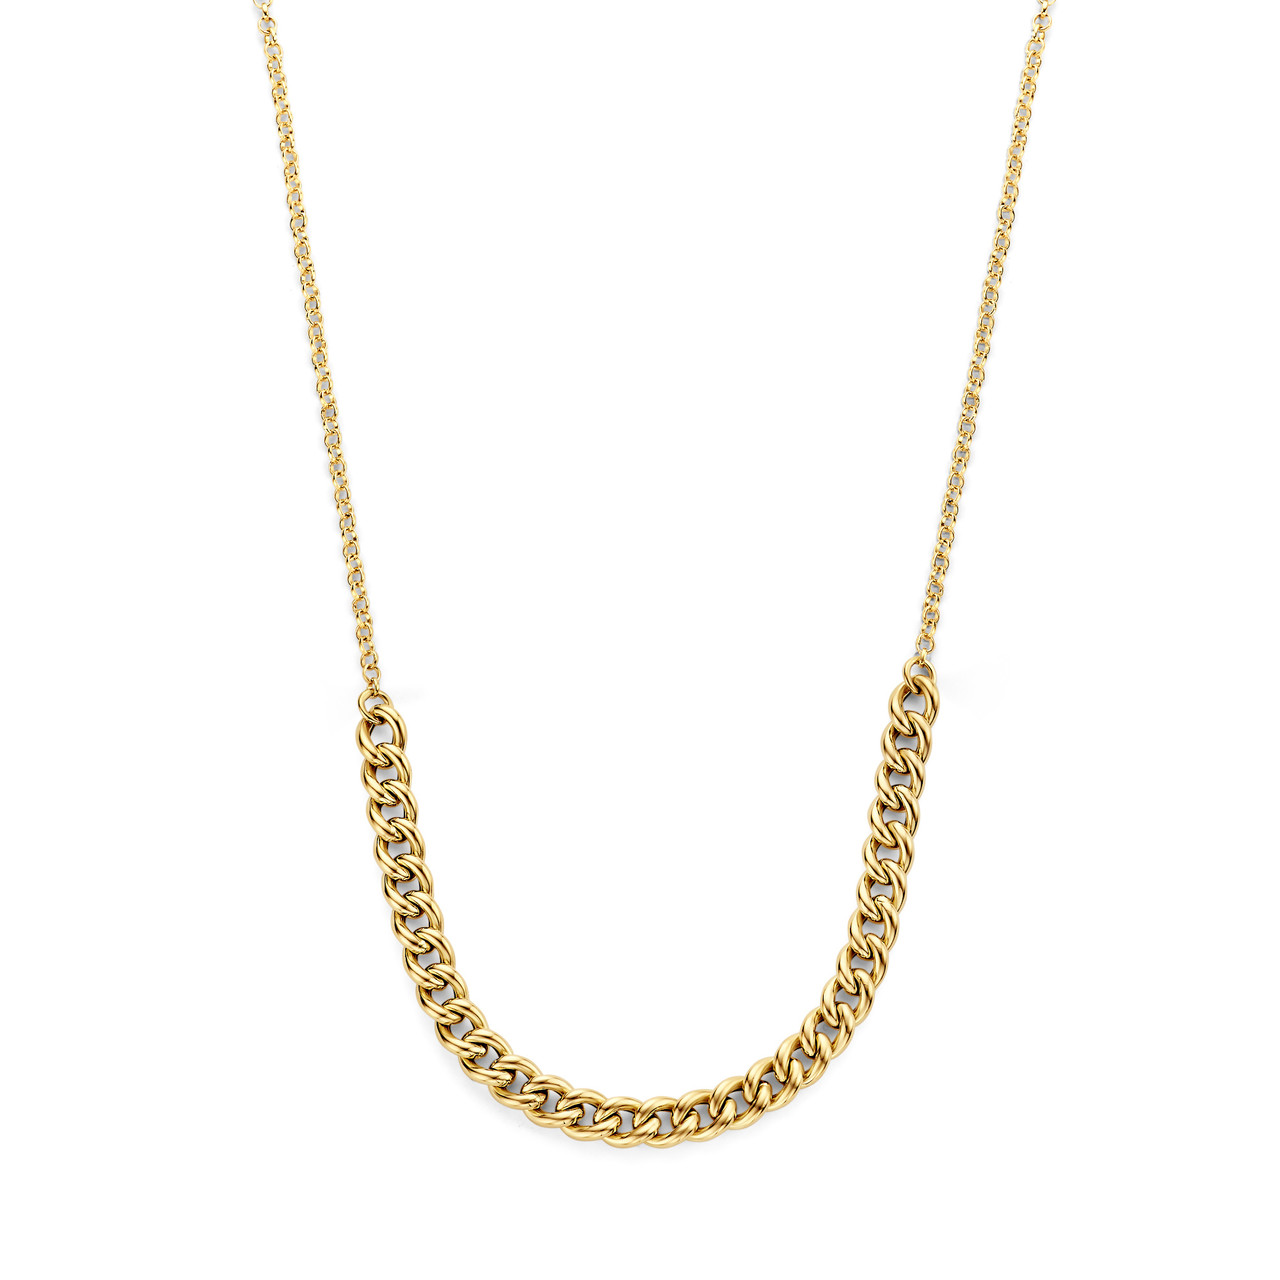 Elisa Pozza by Petronilla - Teddy Bear 18 Karat Australian Pendant Necklace Italian Artisan Pearl Gold